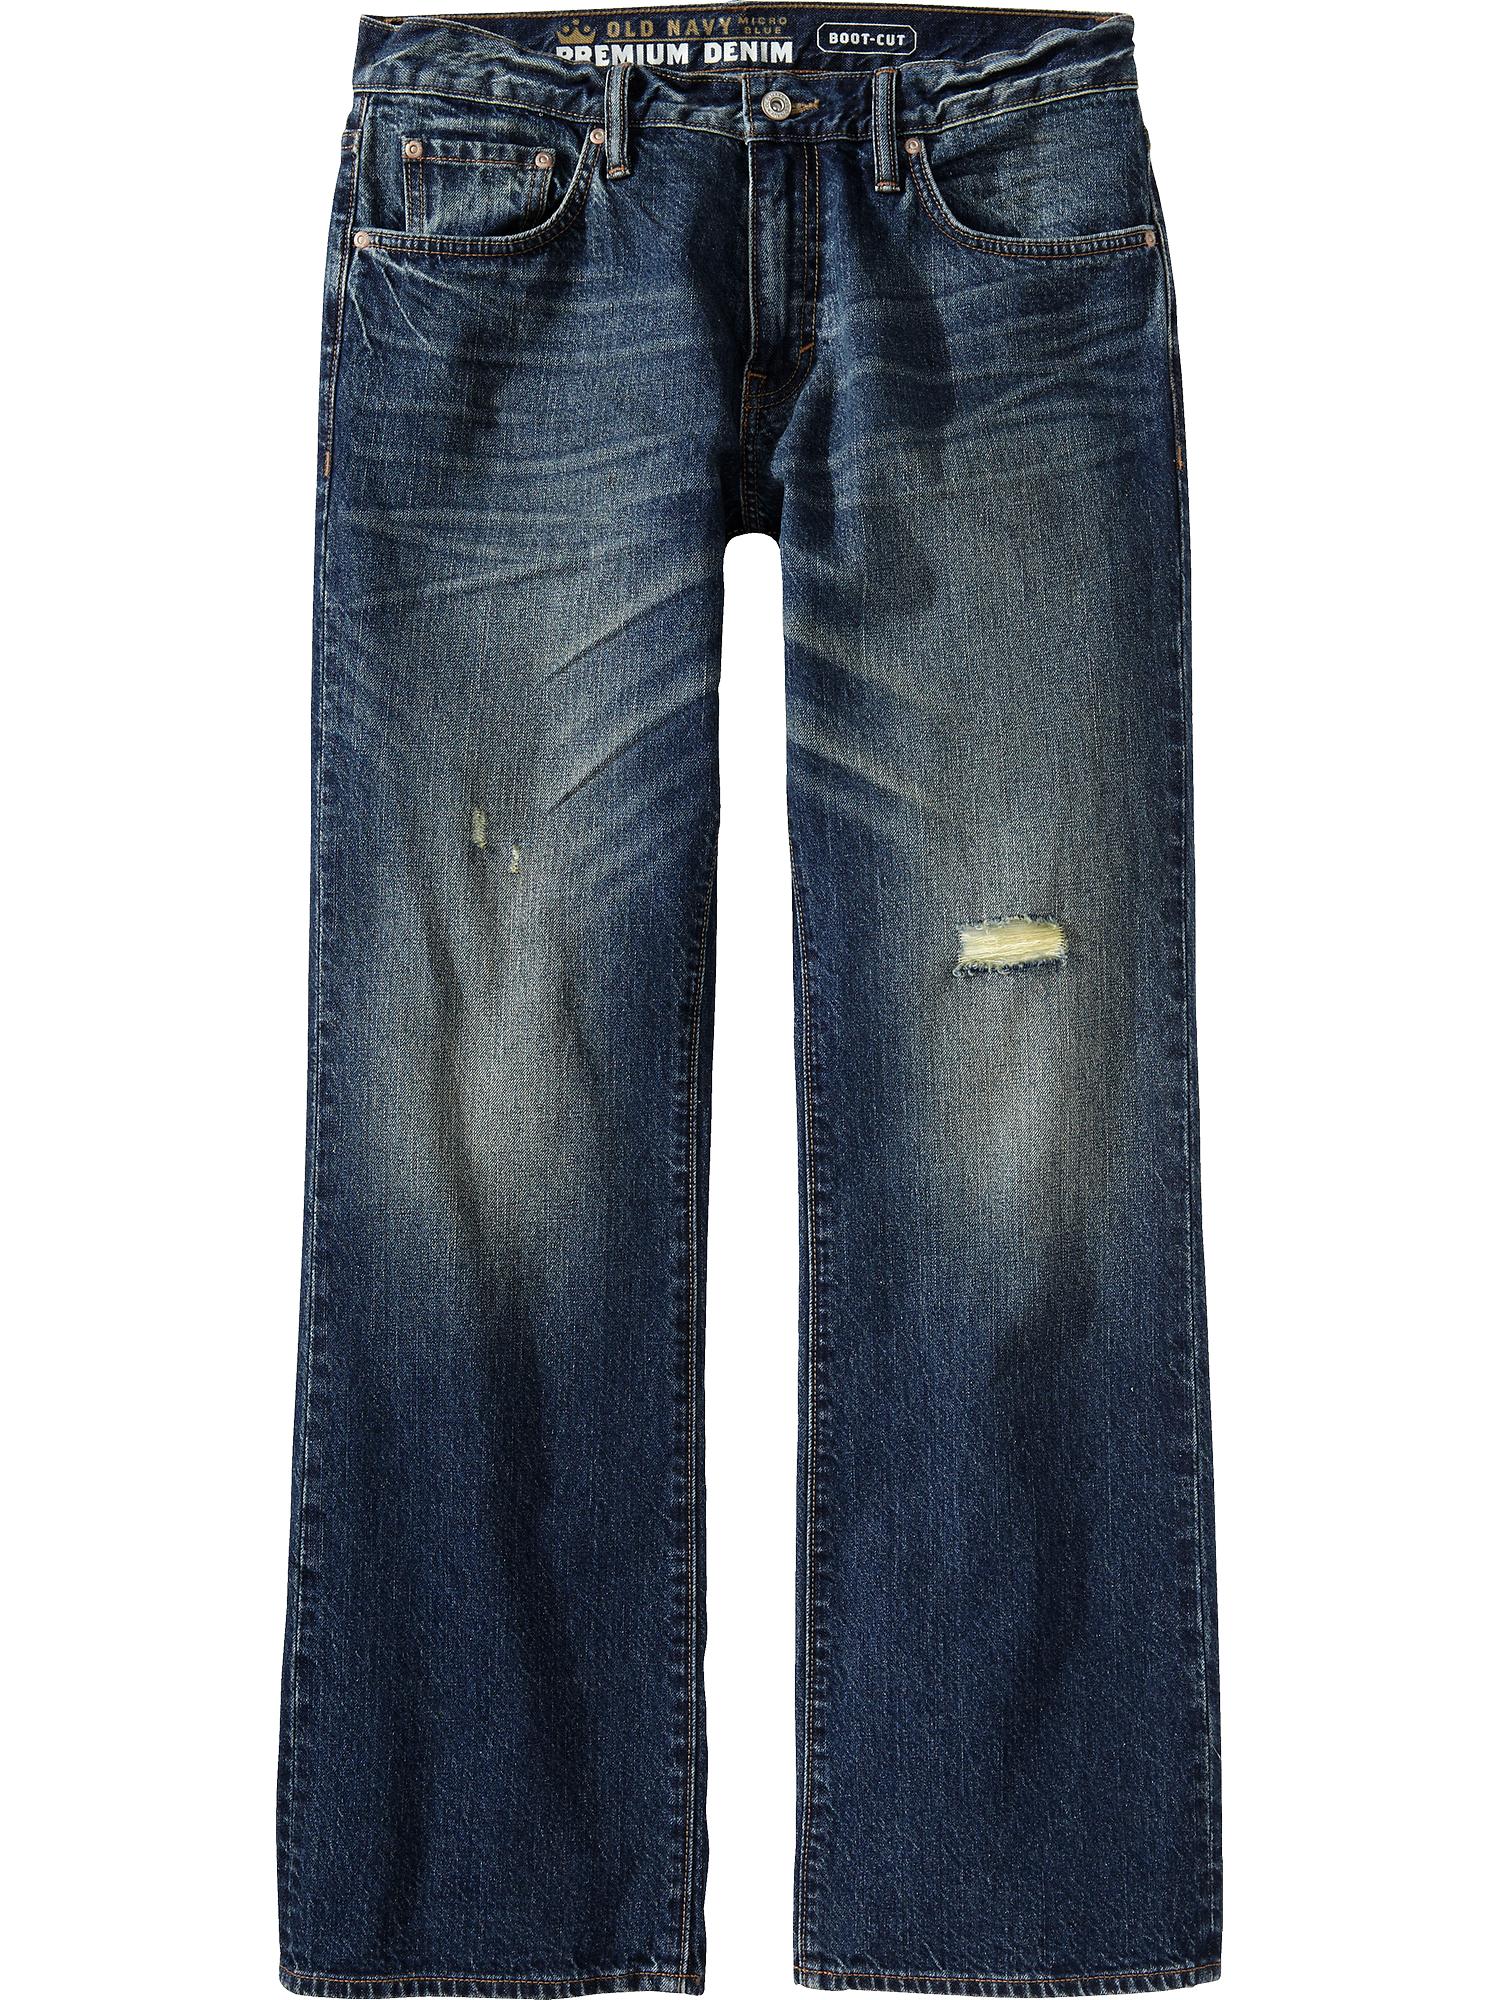 Men's Premium Boot-Cut Jeans | Old Navy